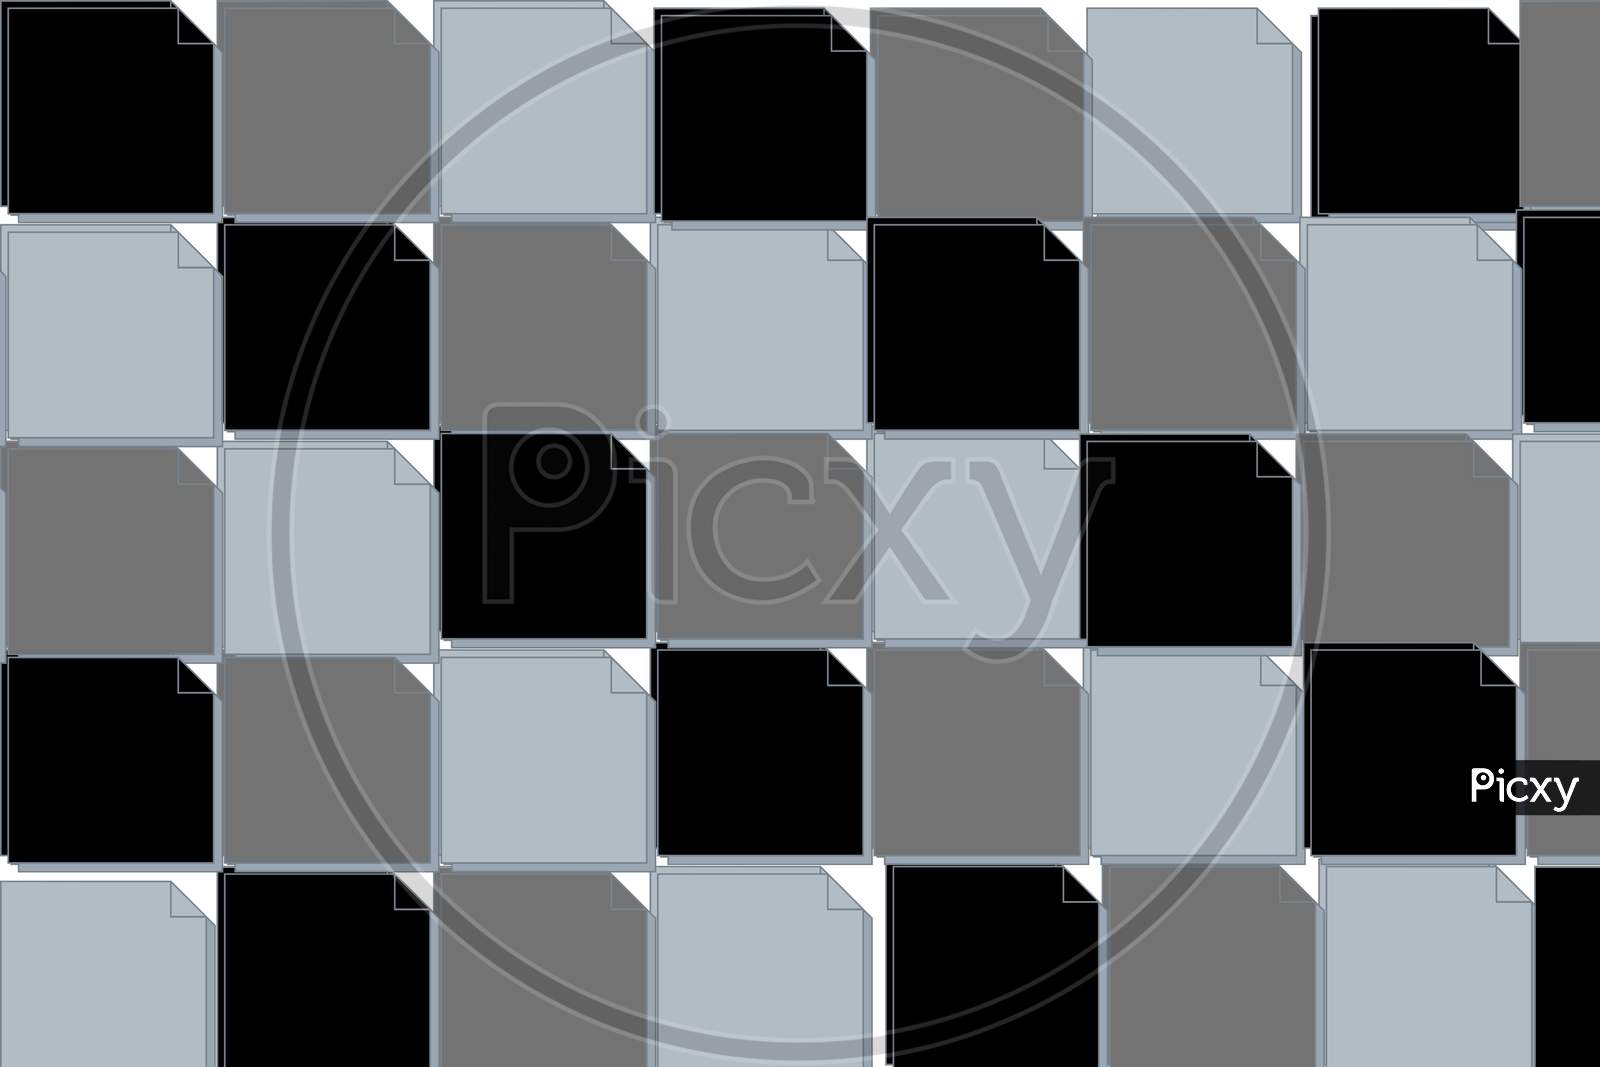 black & gray tiles misaligned or  unevenly cropped pattern background illustration